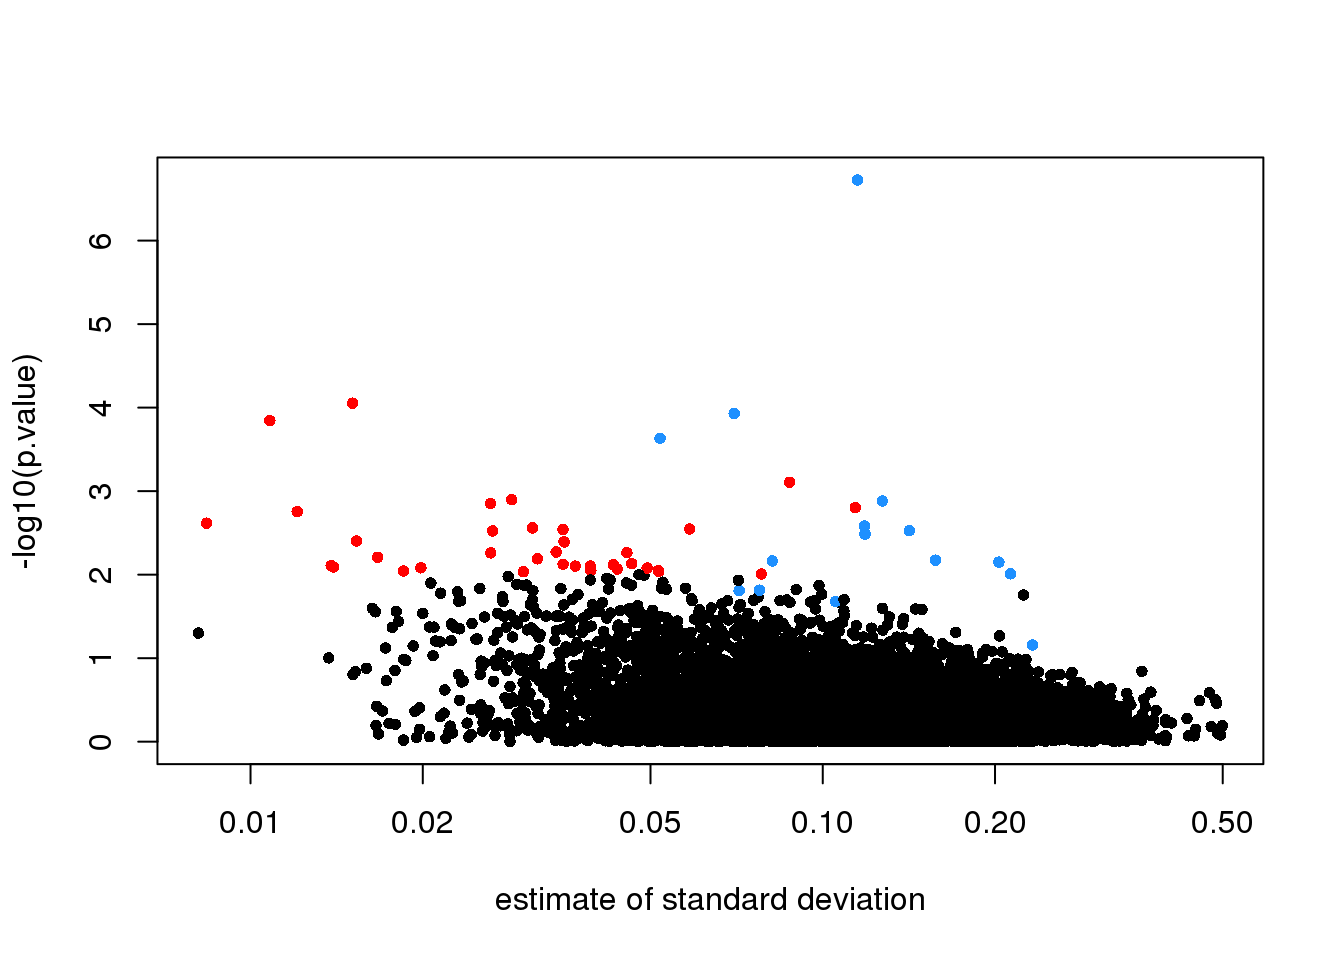 p-values versus standard deviation estimates.